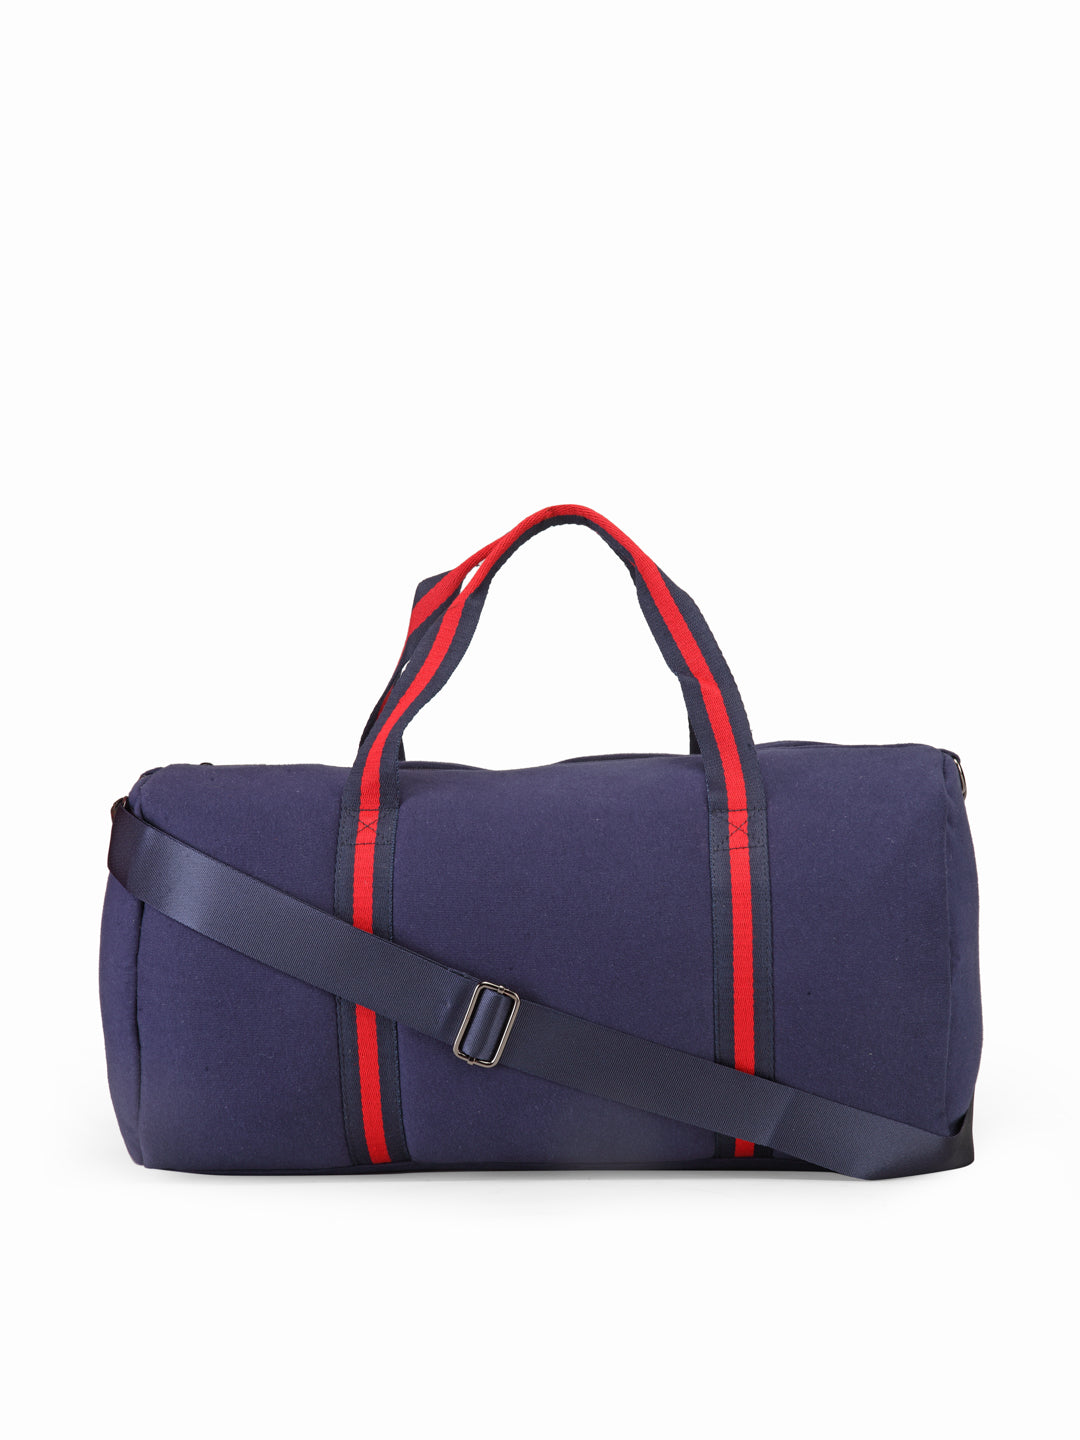 Navy Blue Duffle Bag